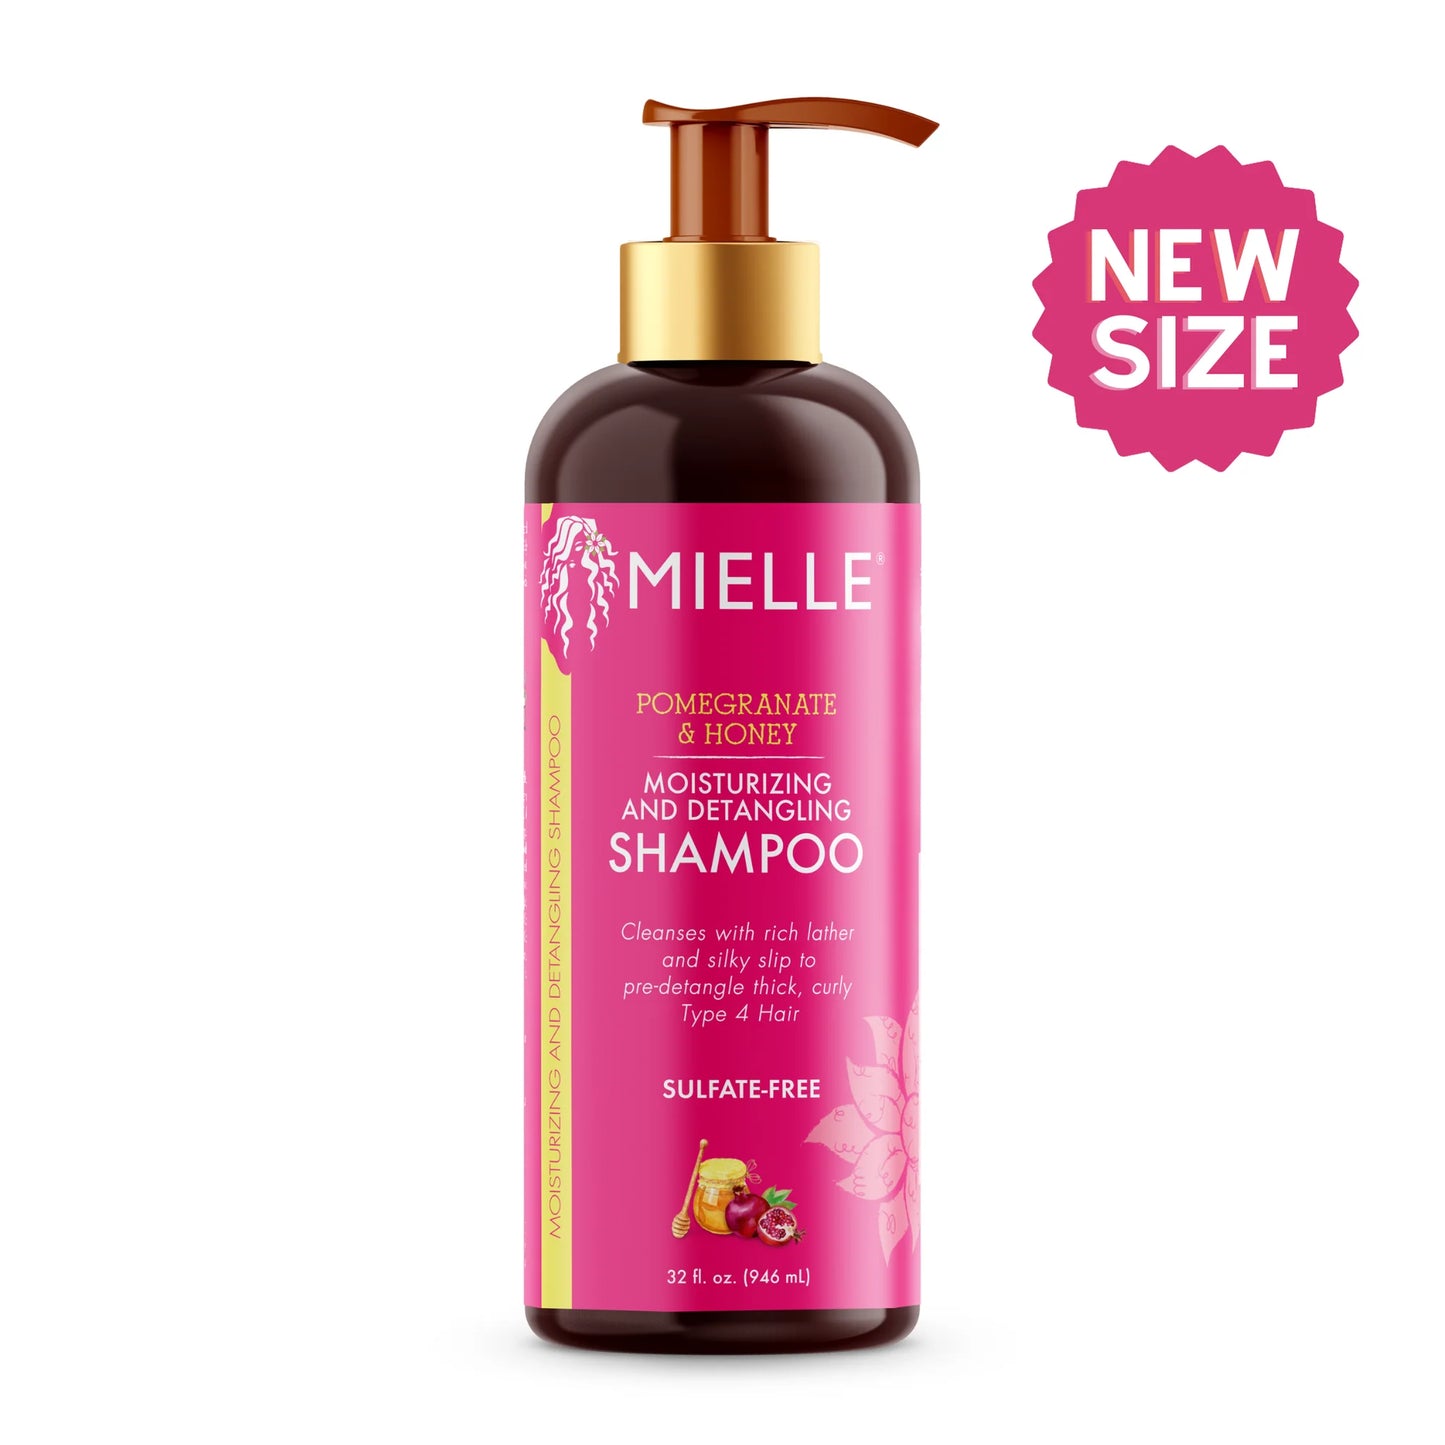 MIELLE ORGANICS Pomegranate & Honey Detangling Shampoo